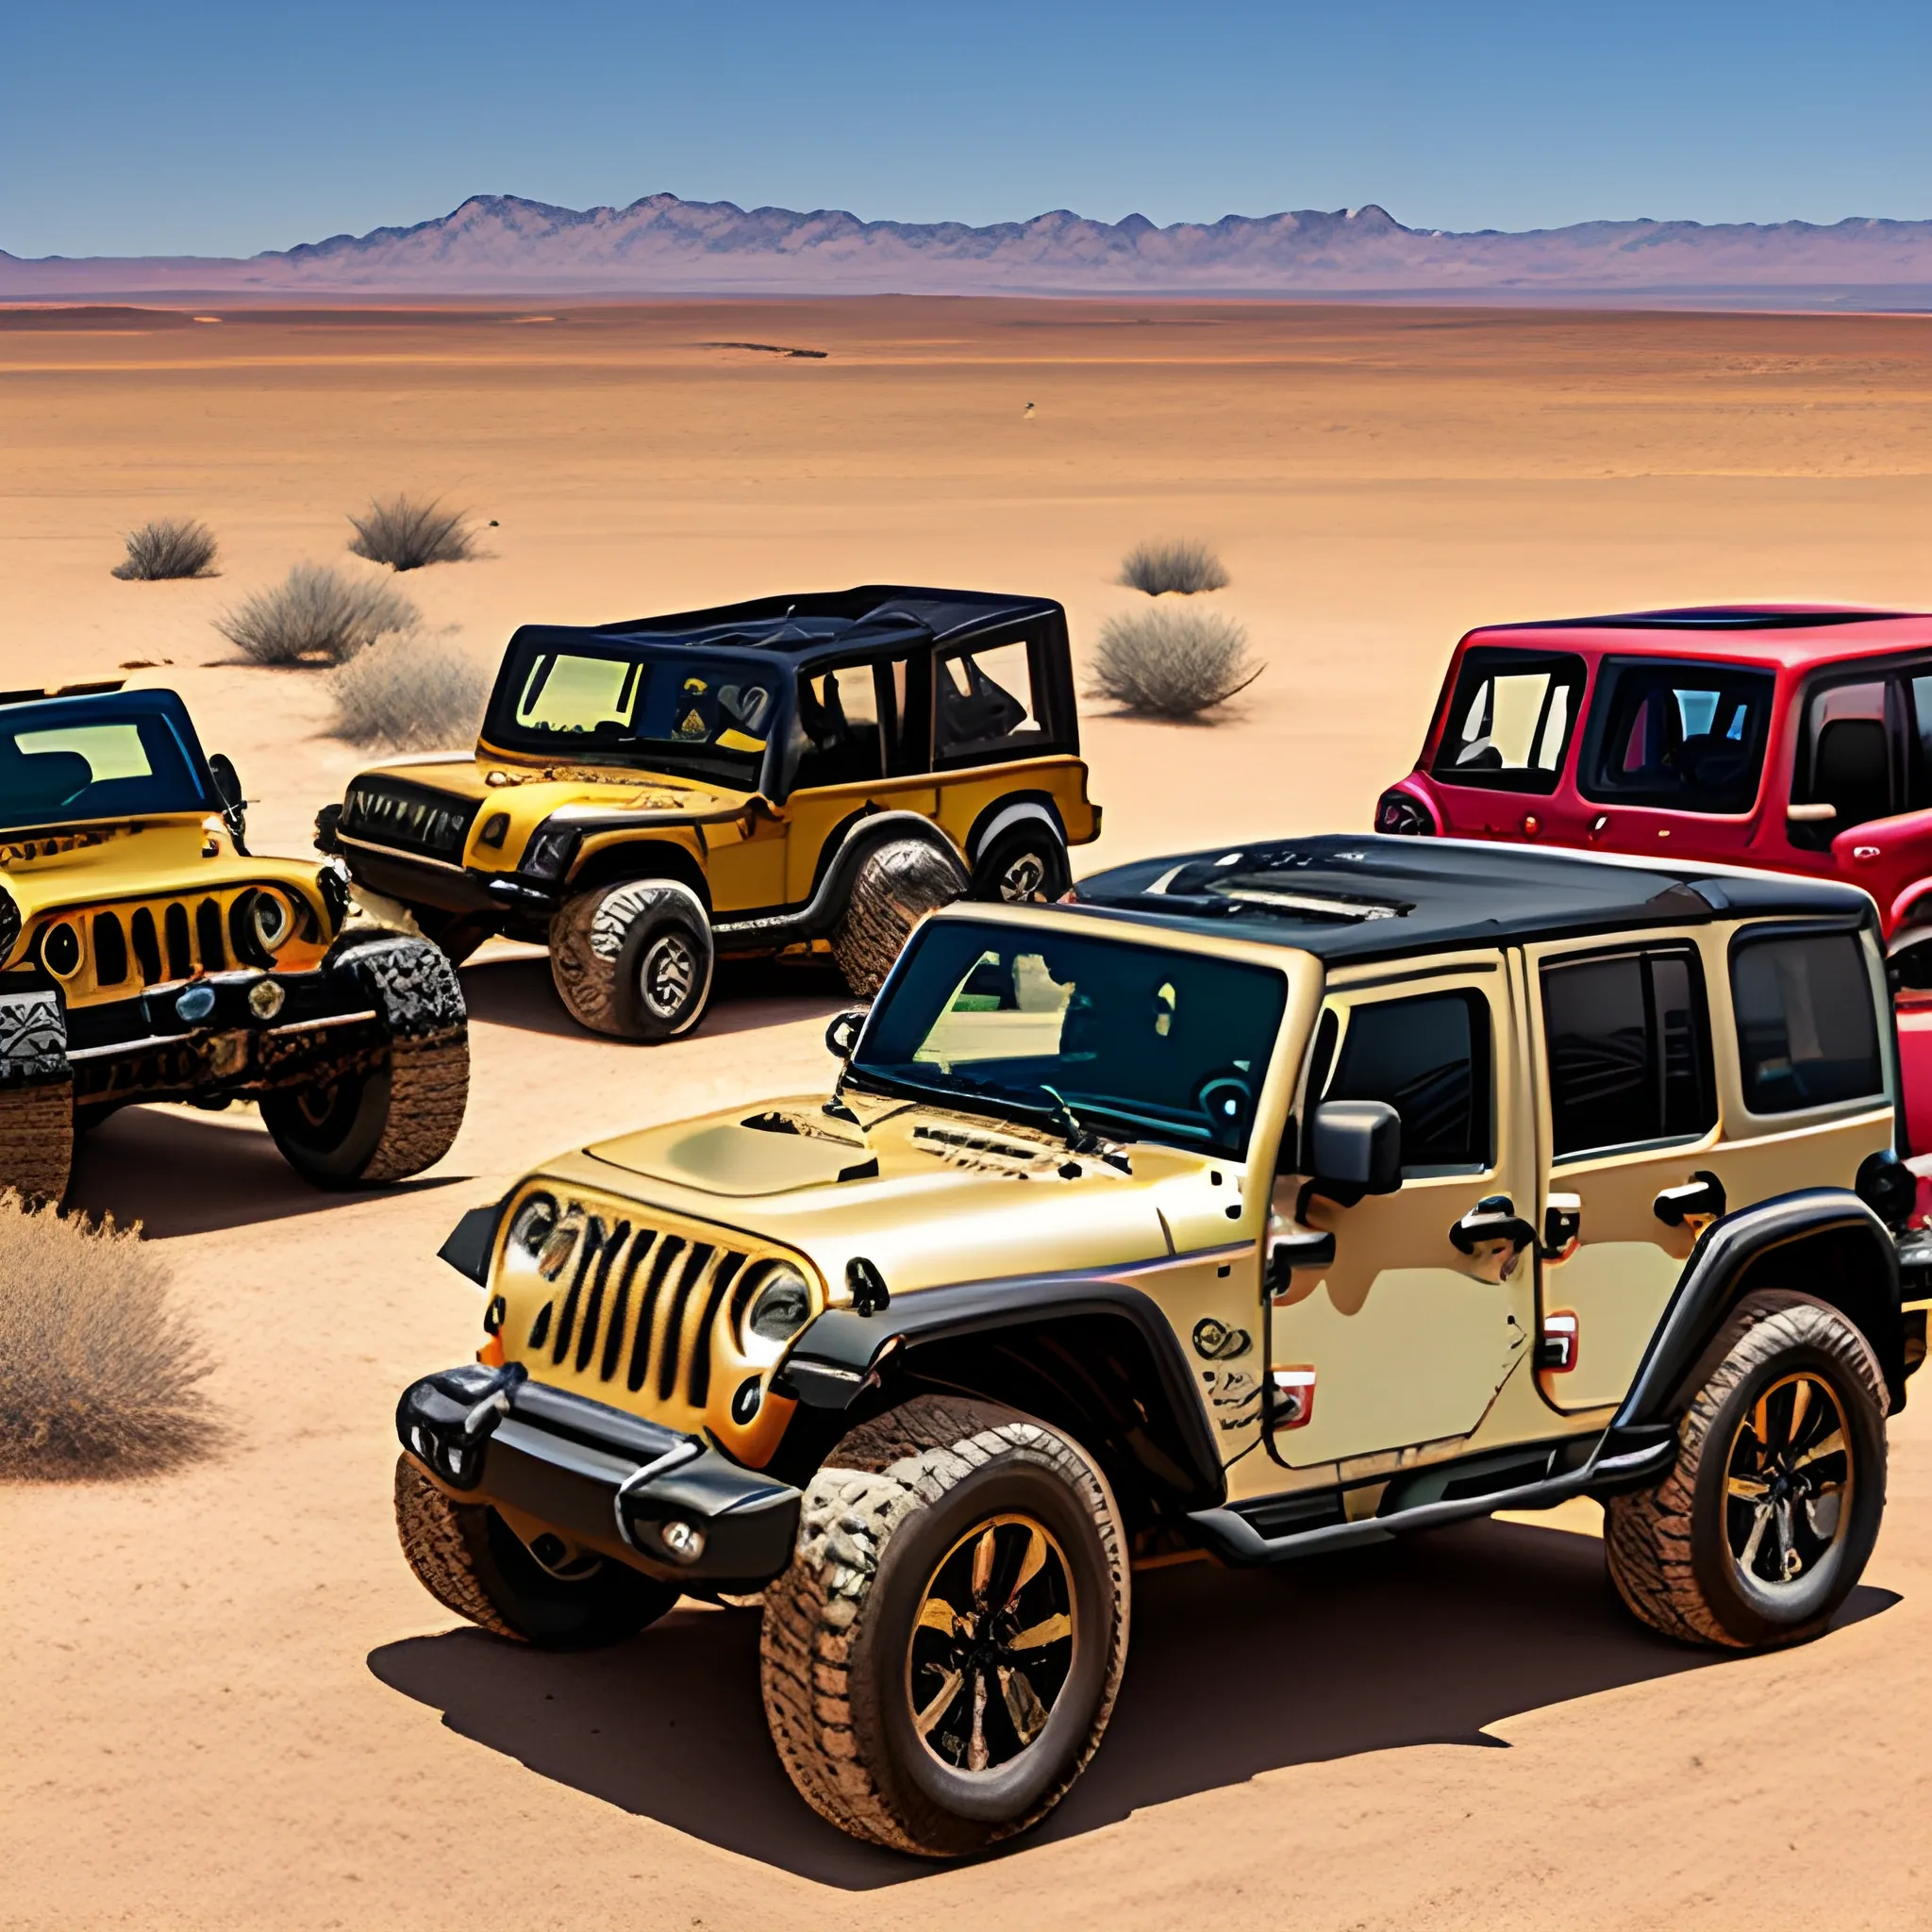 
multiple jeeps in desert